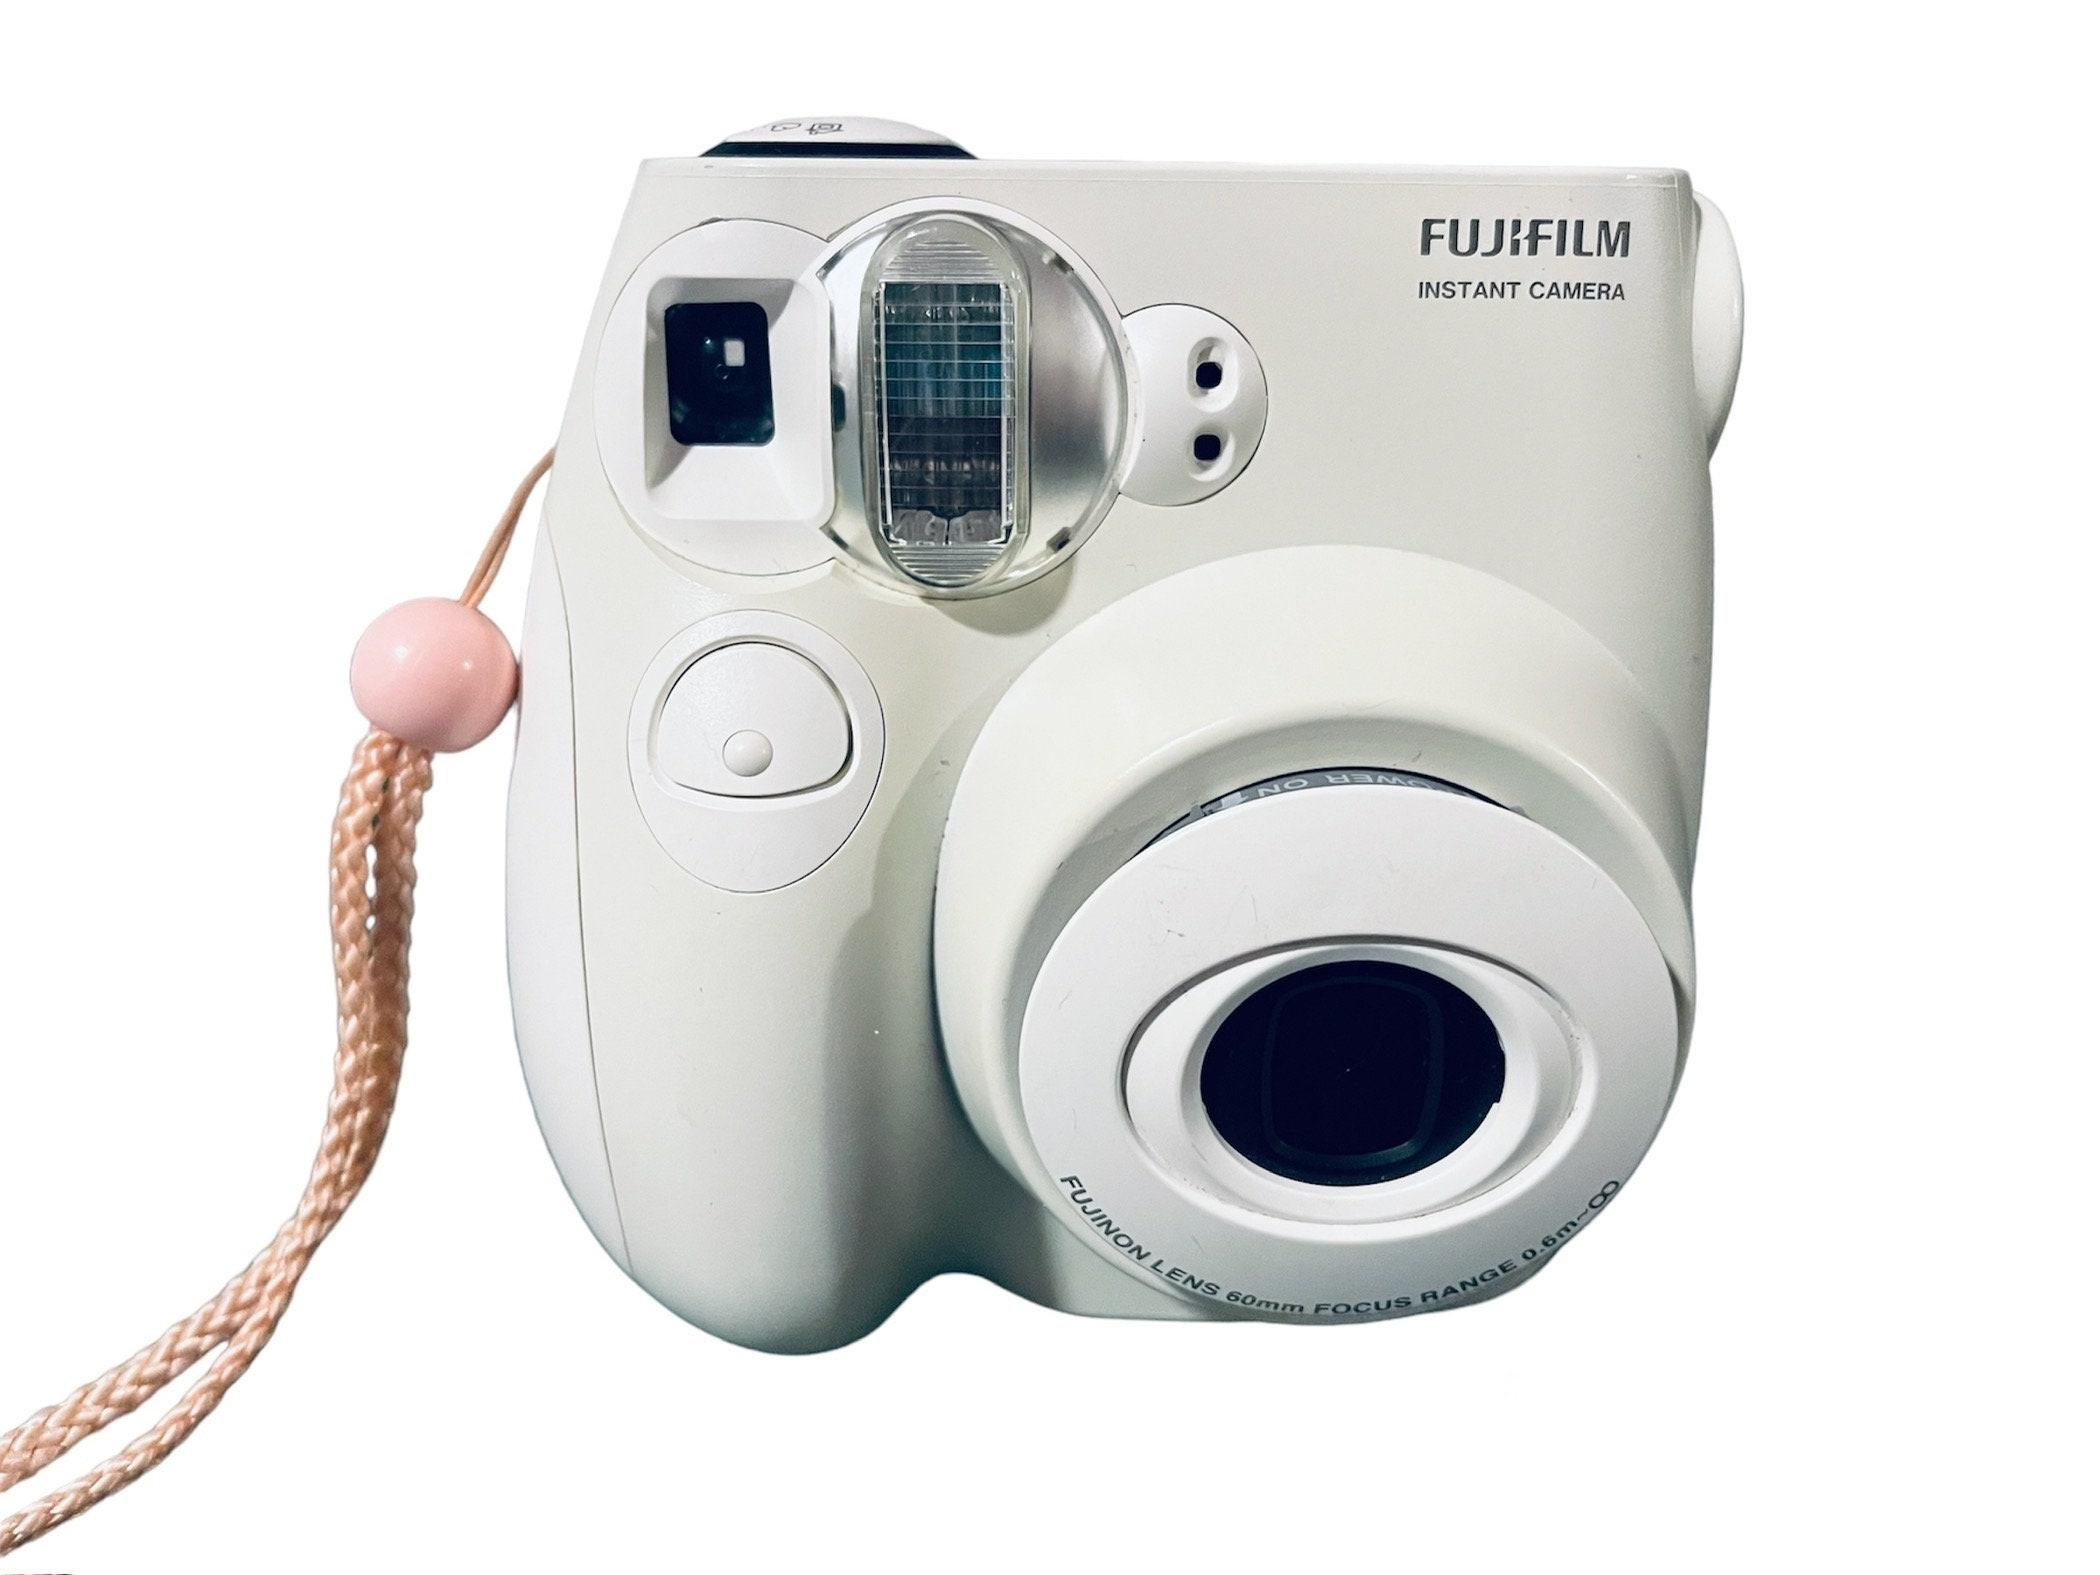 FUJIFILM Instax Mini 7+ Instant Film Camera - Coral